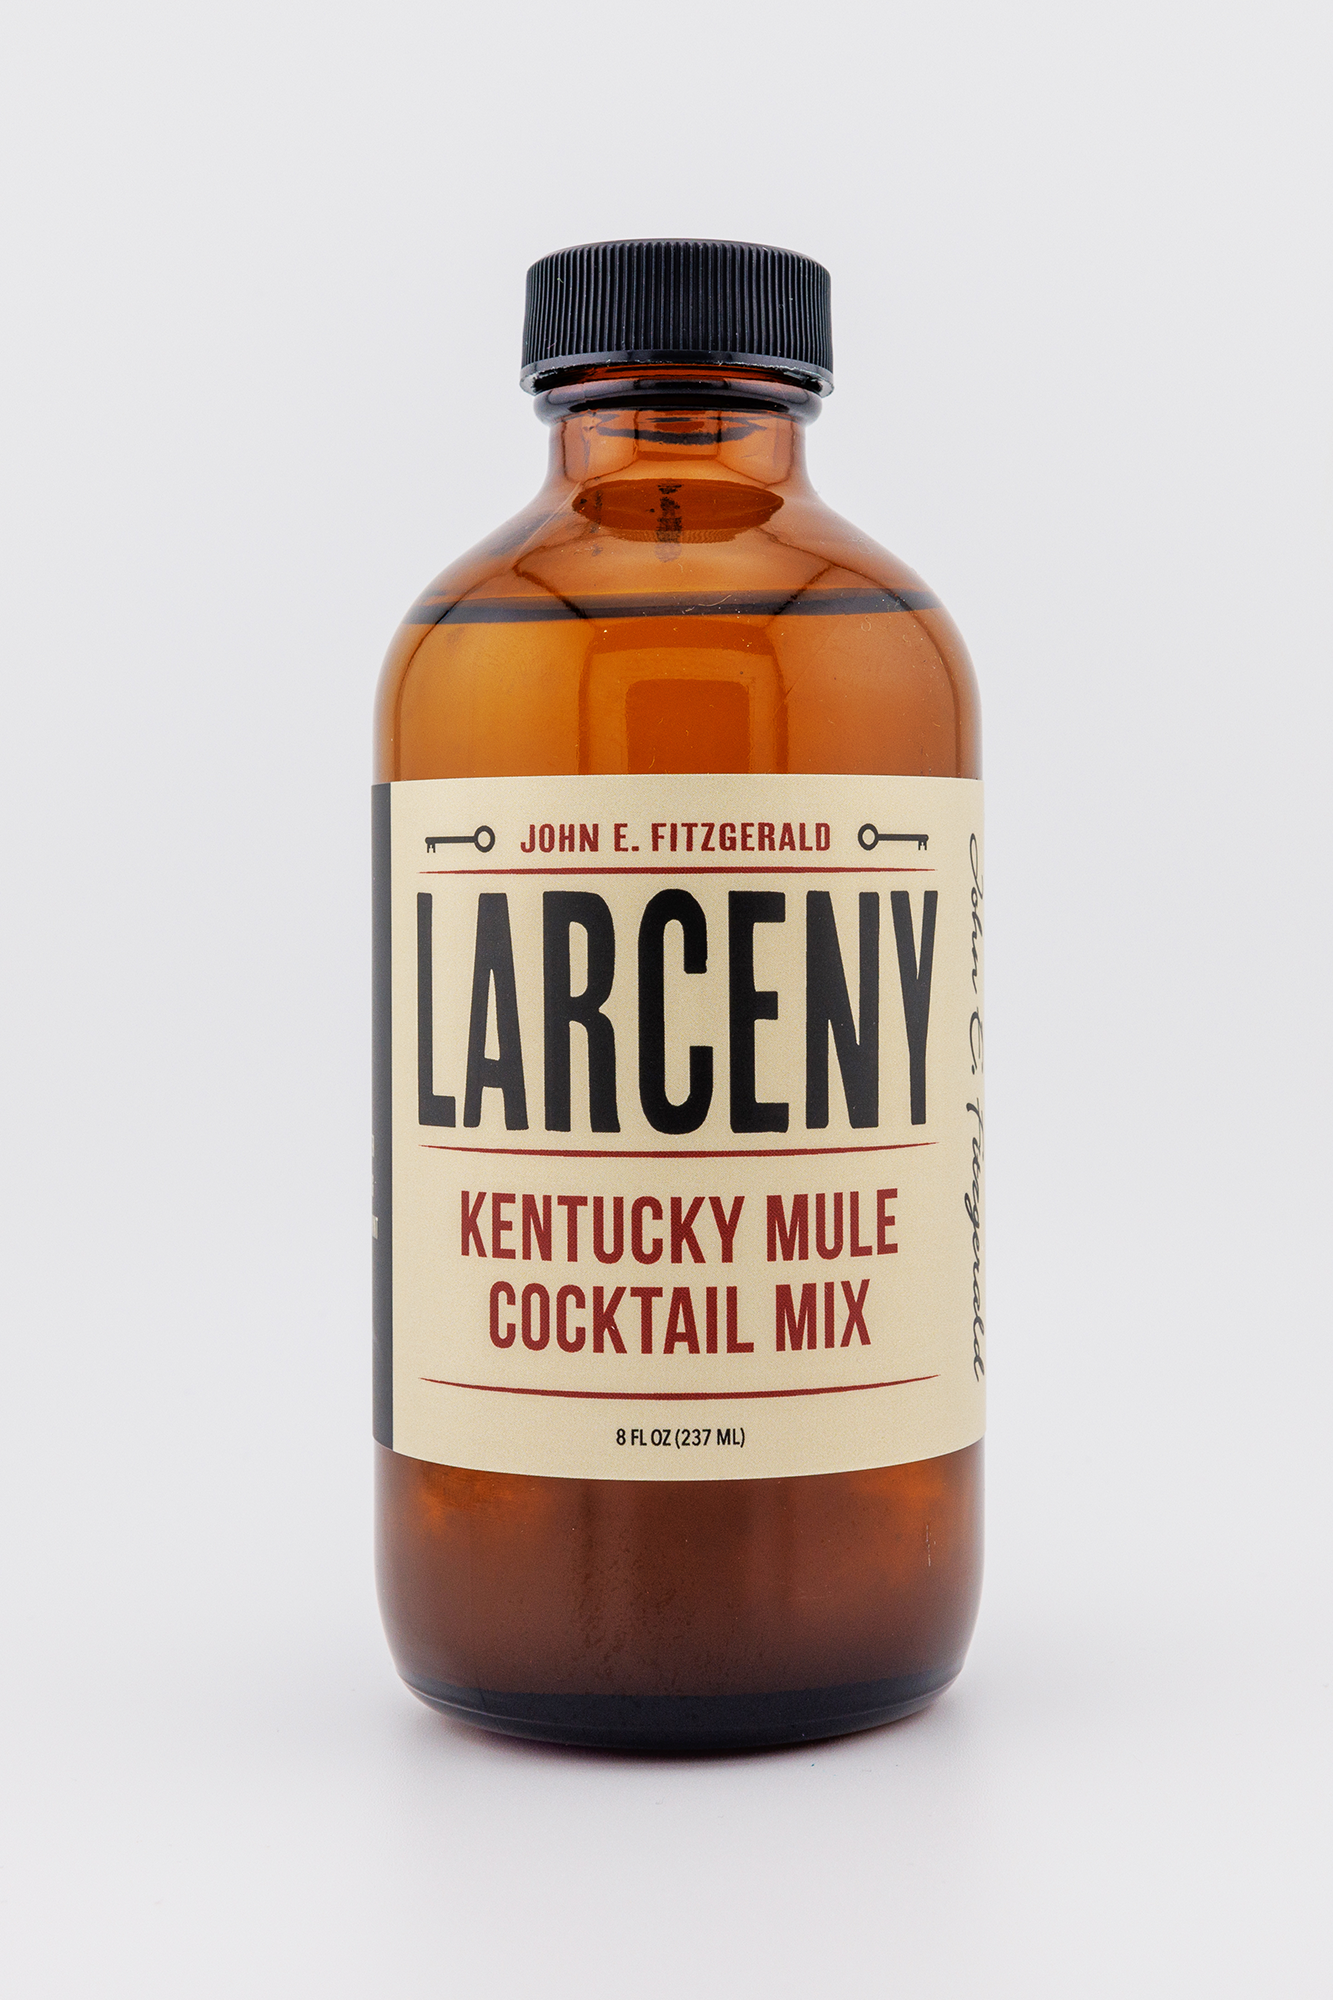 Larceny, Kentucky Mule Cocktail Mix